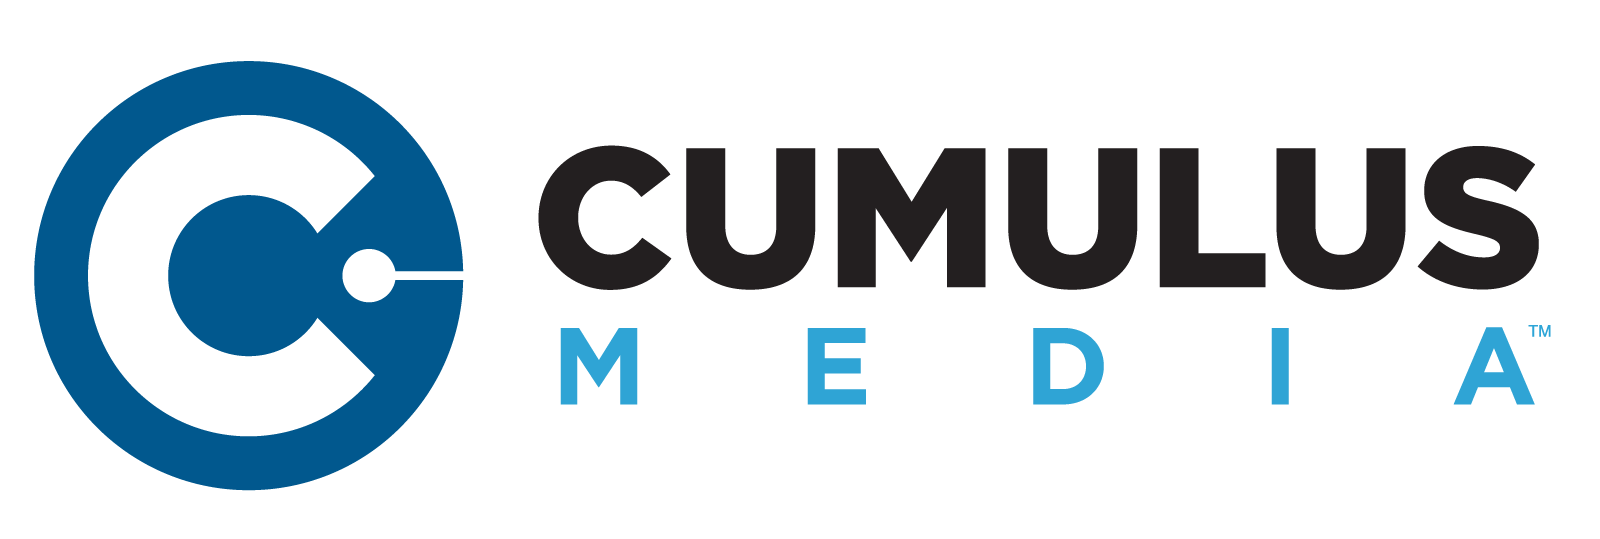 Cumulus logo.png